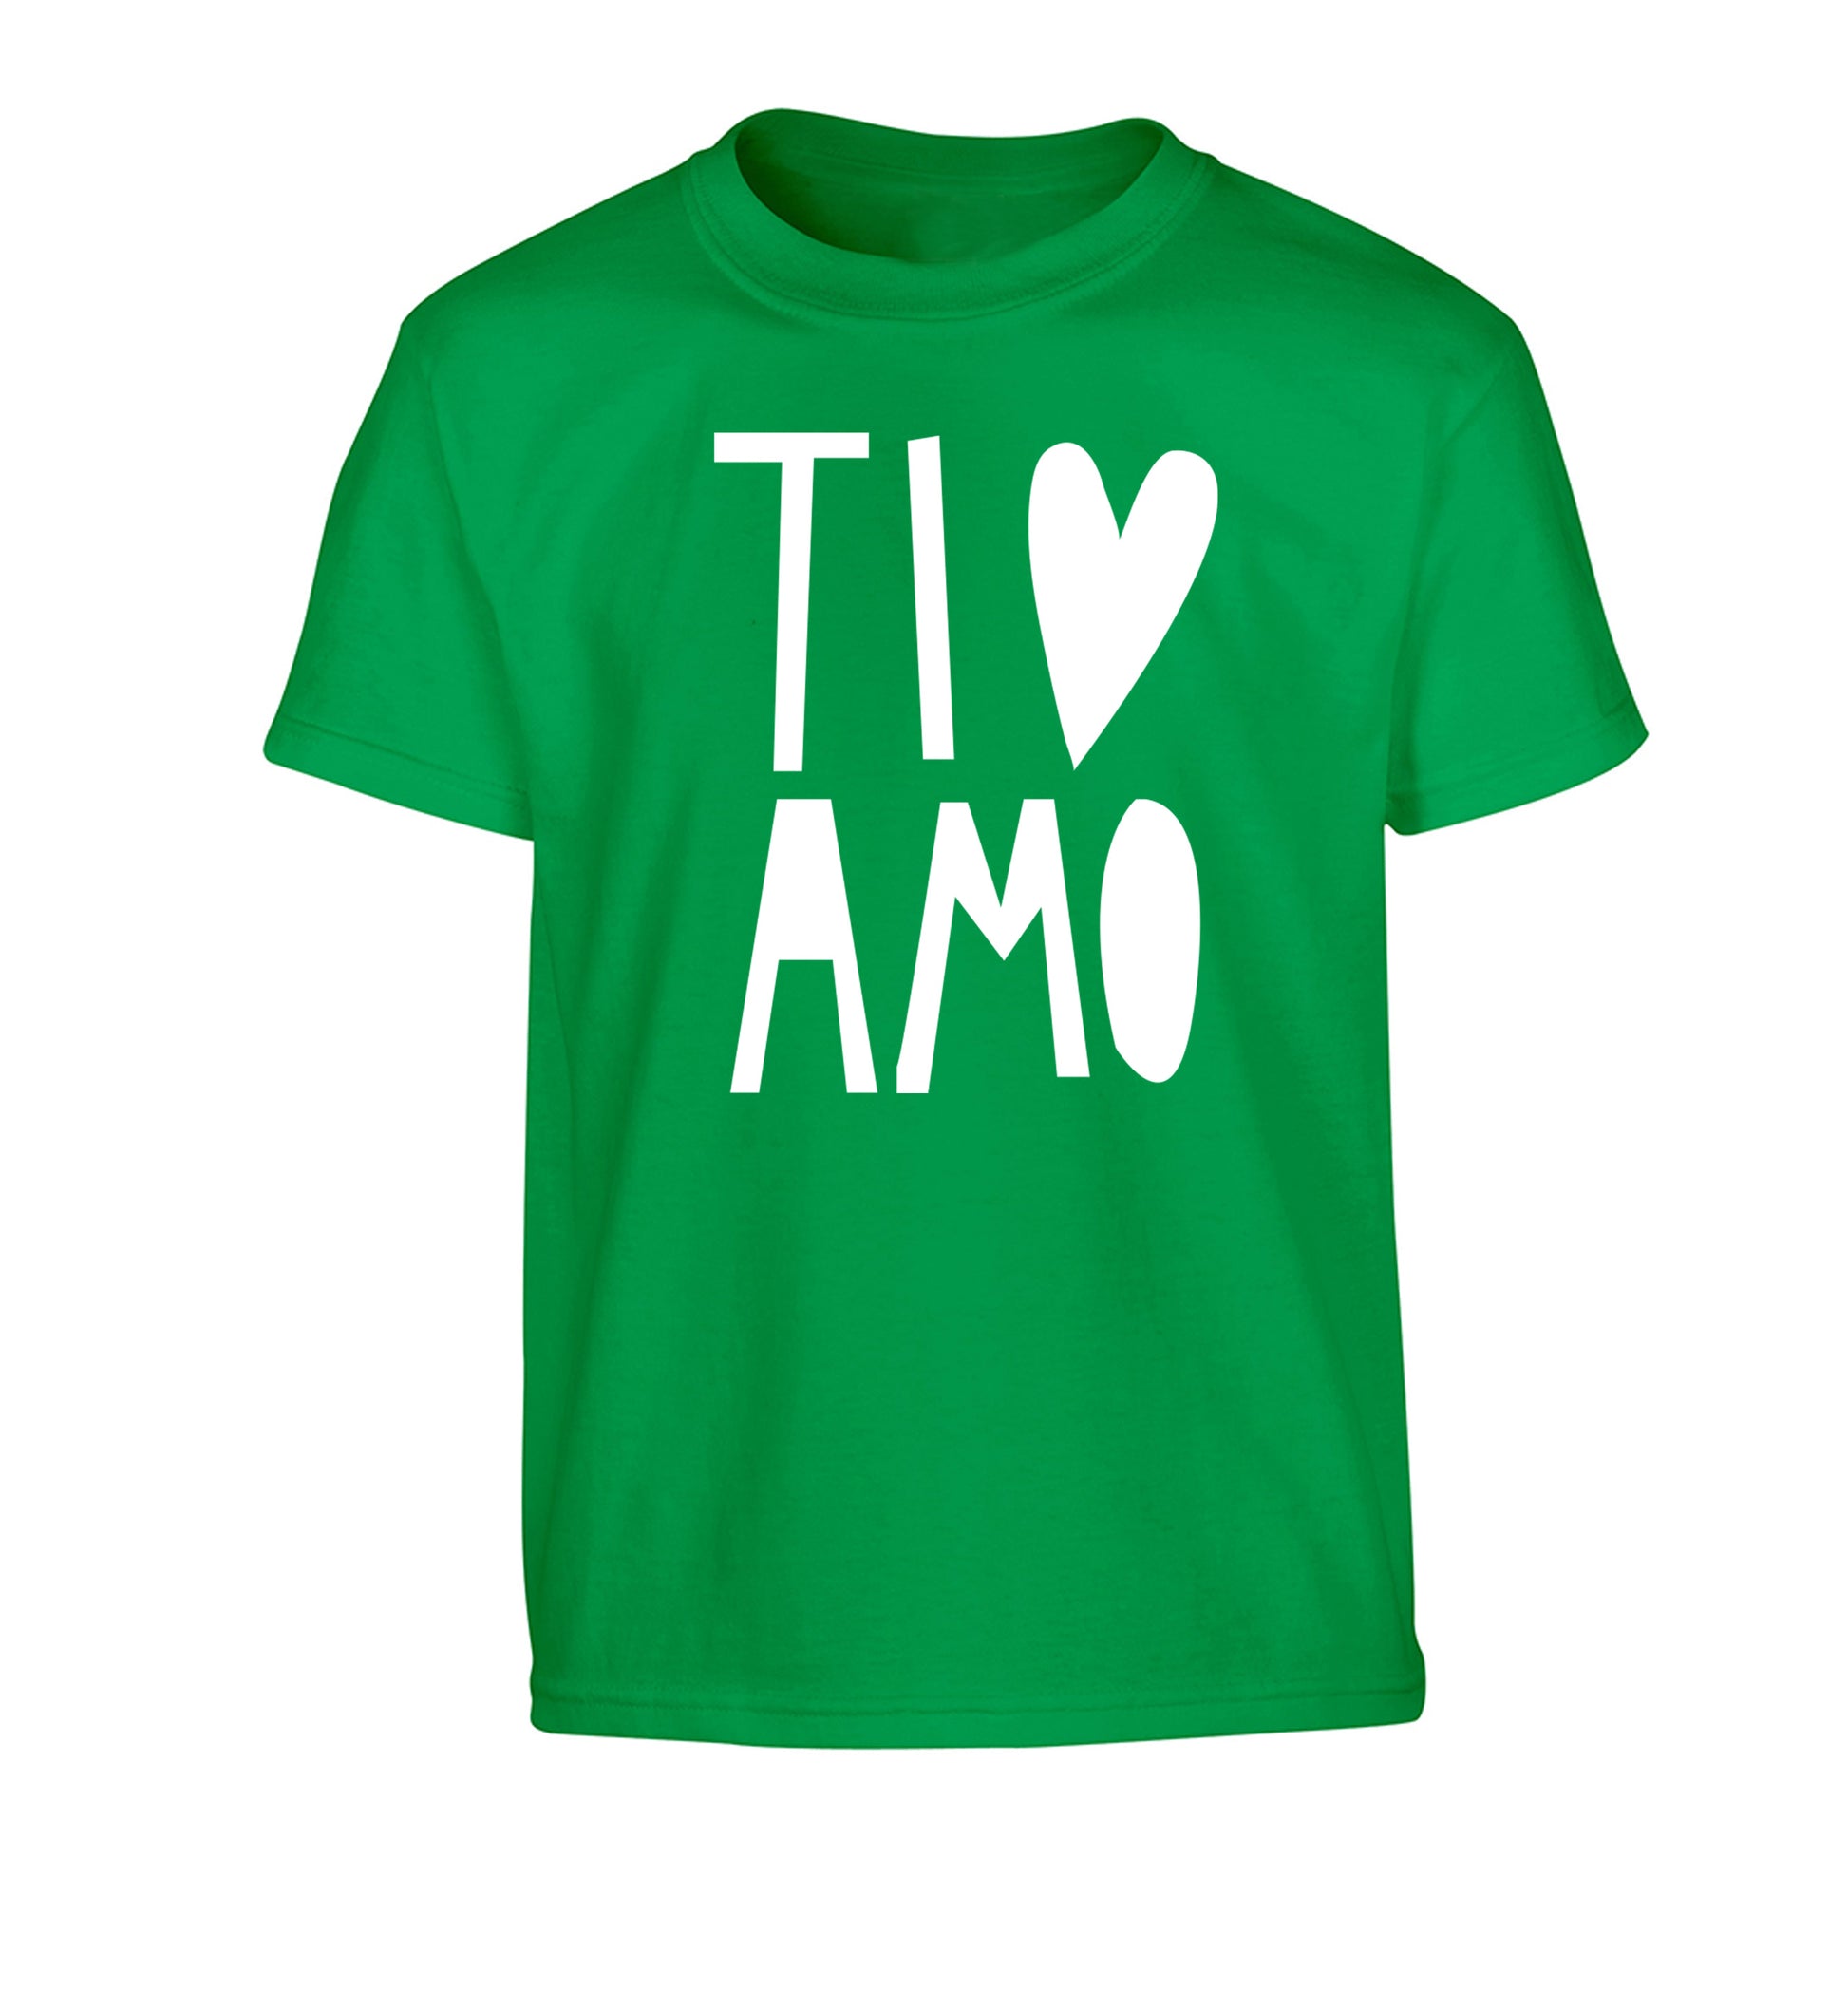 Ti amo - I love you Children's green Tshirt 12-13 Years